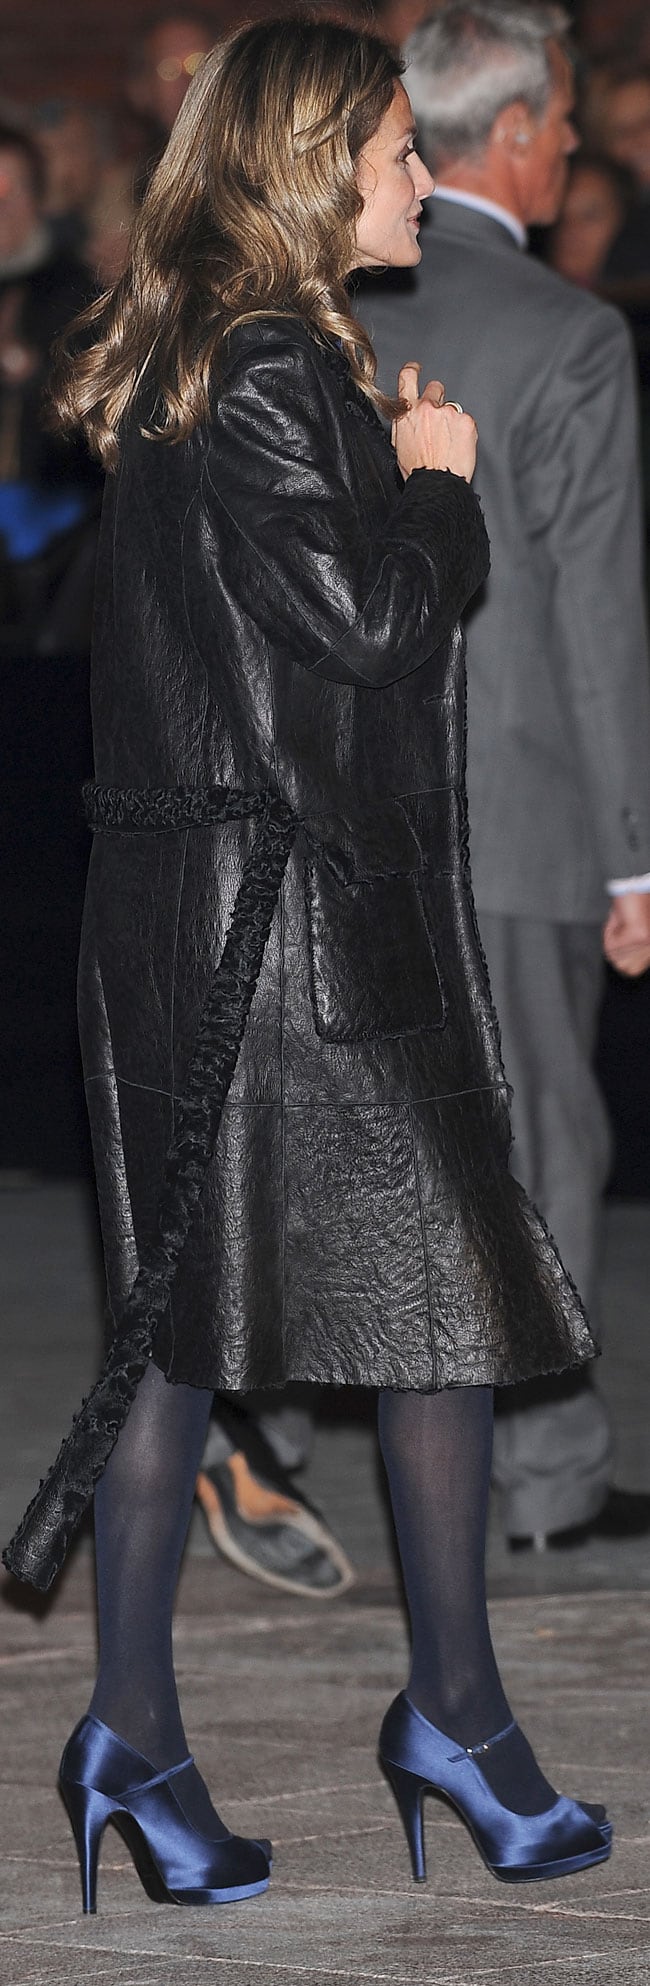 2009-el-abrigo